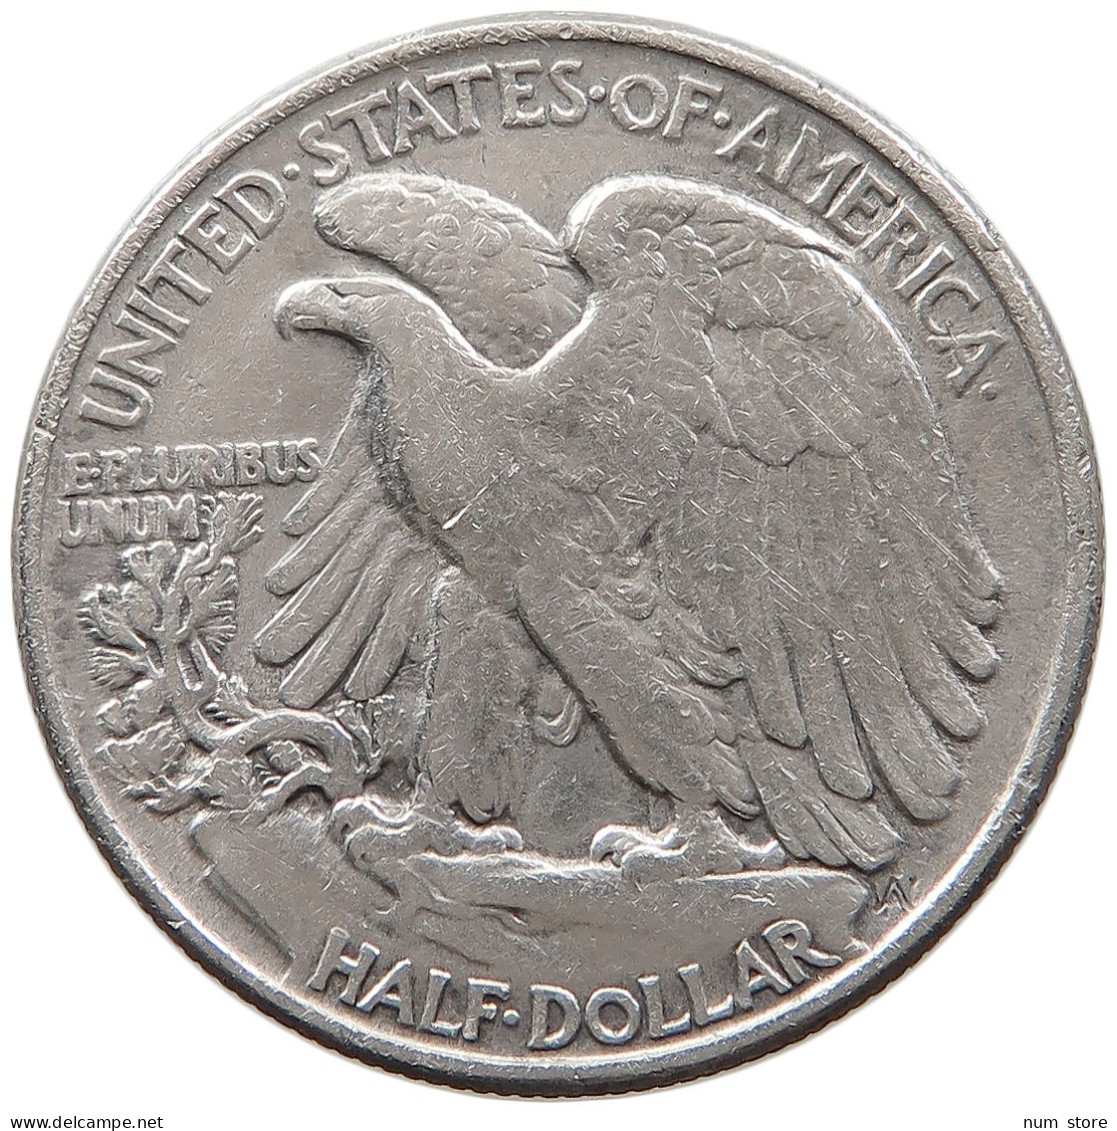 UNITED STATES OF AMERICA HALF 1/2 DOLLAR 1946 WALKING LIBERTY #t143 0315 - 1916-1947: Liberty Walking